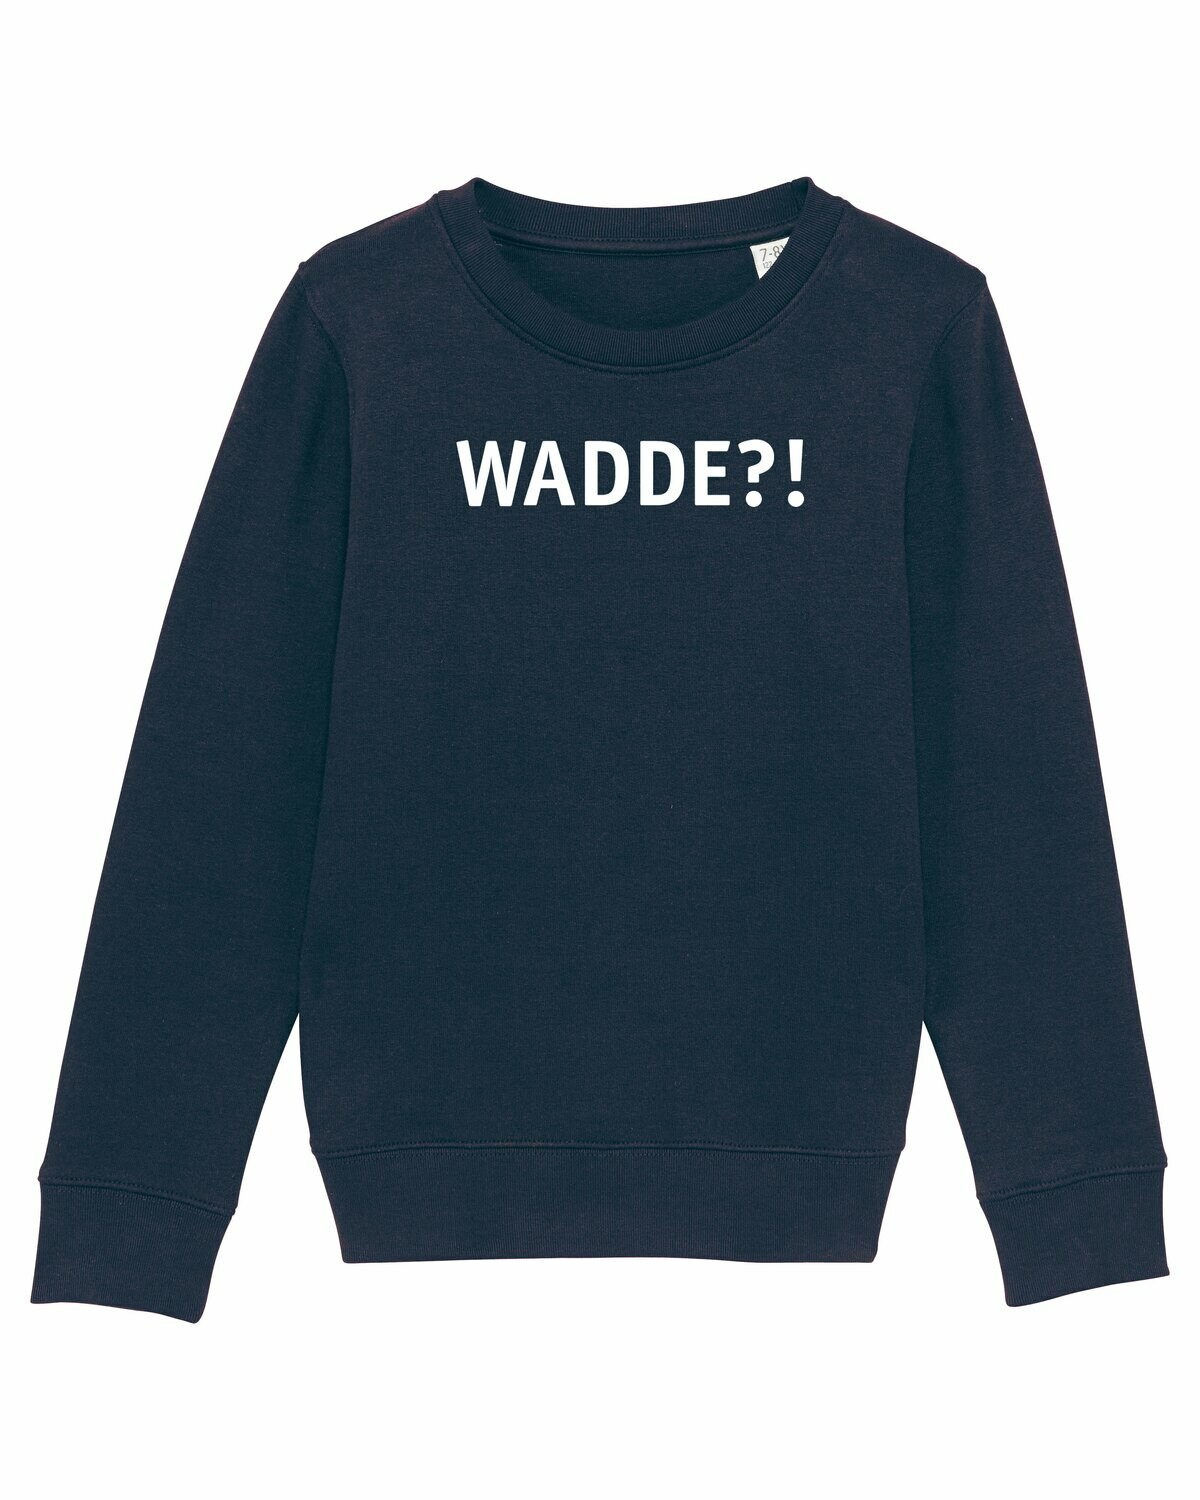 Kids Sweater Wadde?!